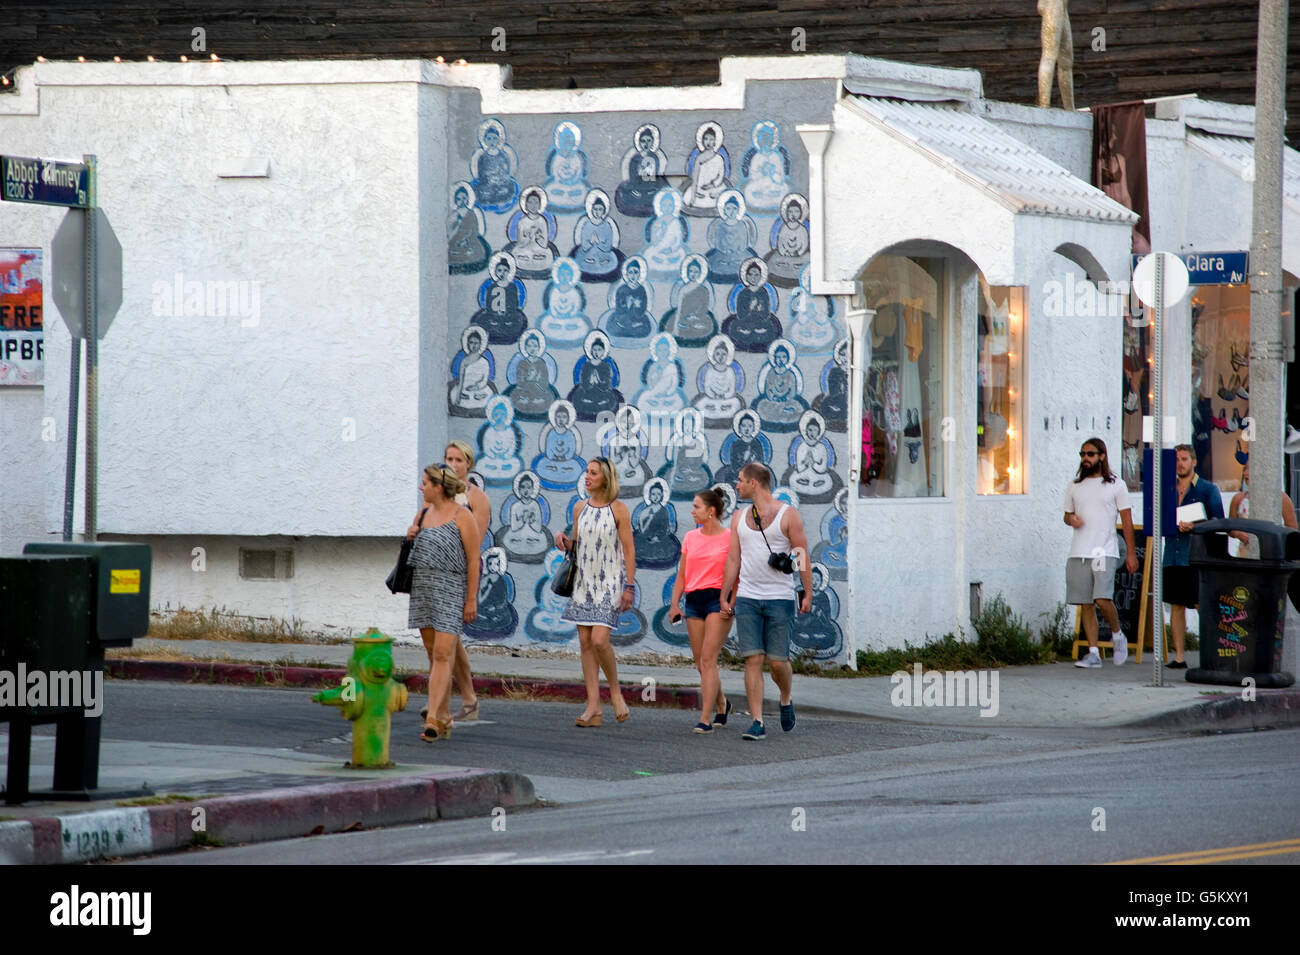 People walking along Abbot Kinney Blvd. in Venice, California Stock Photo